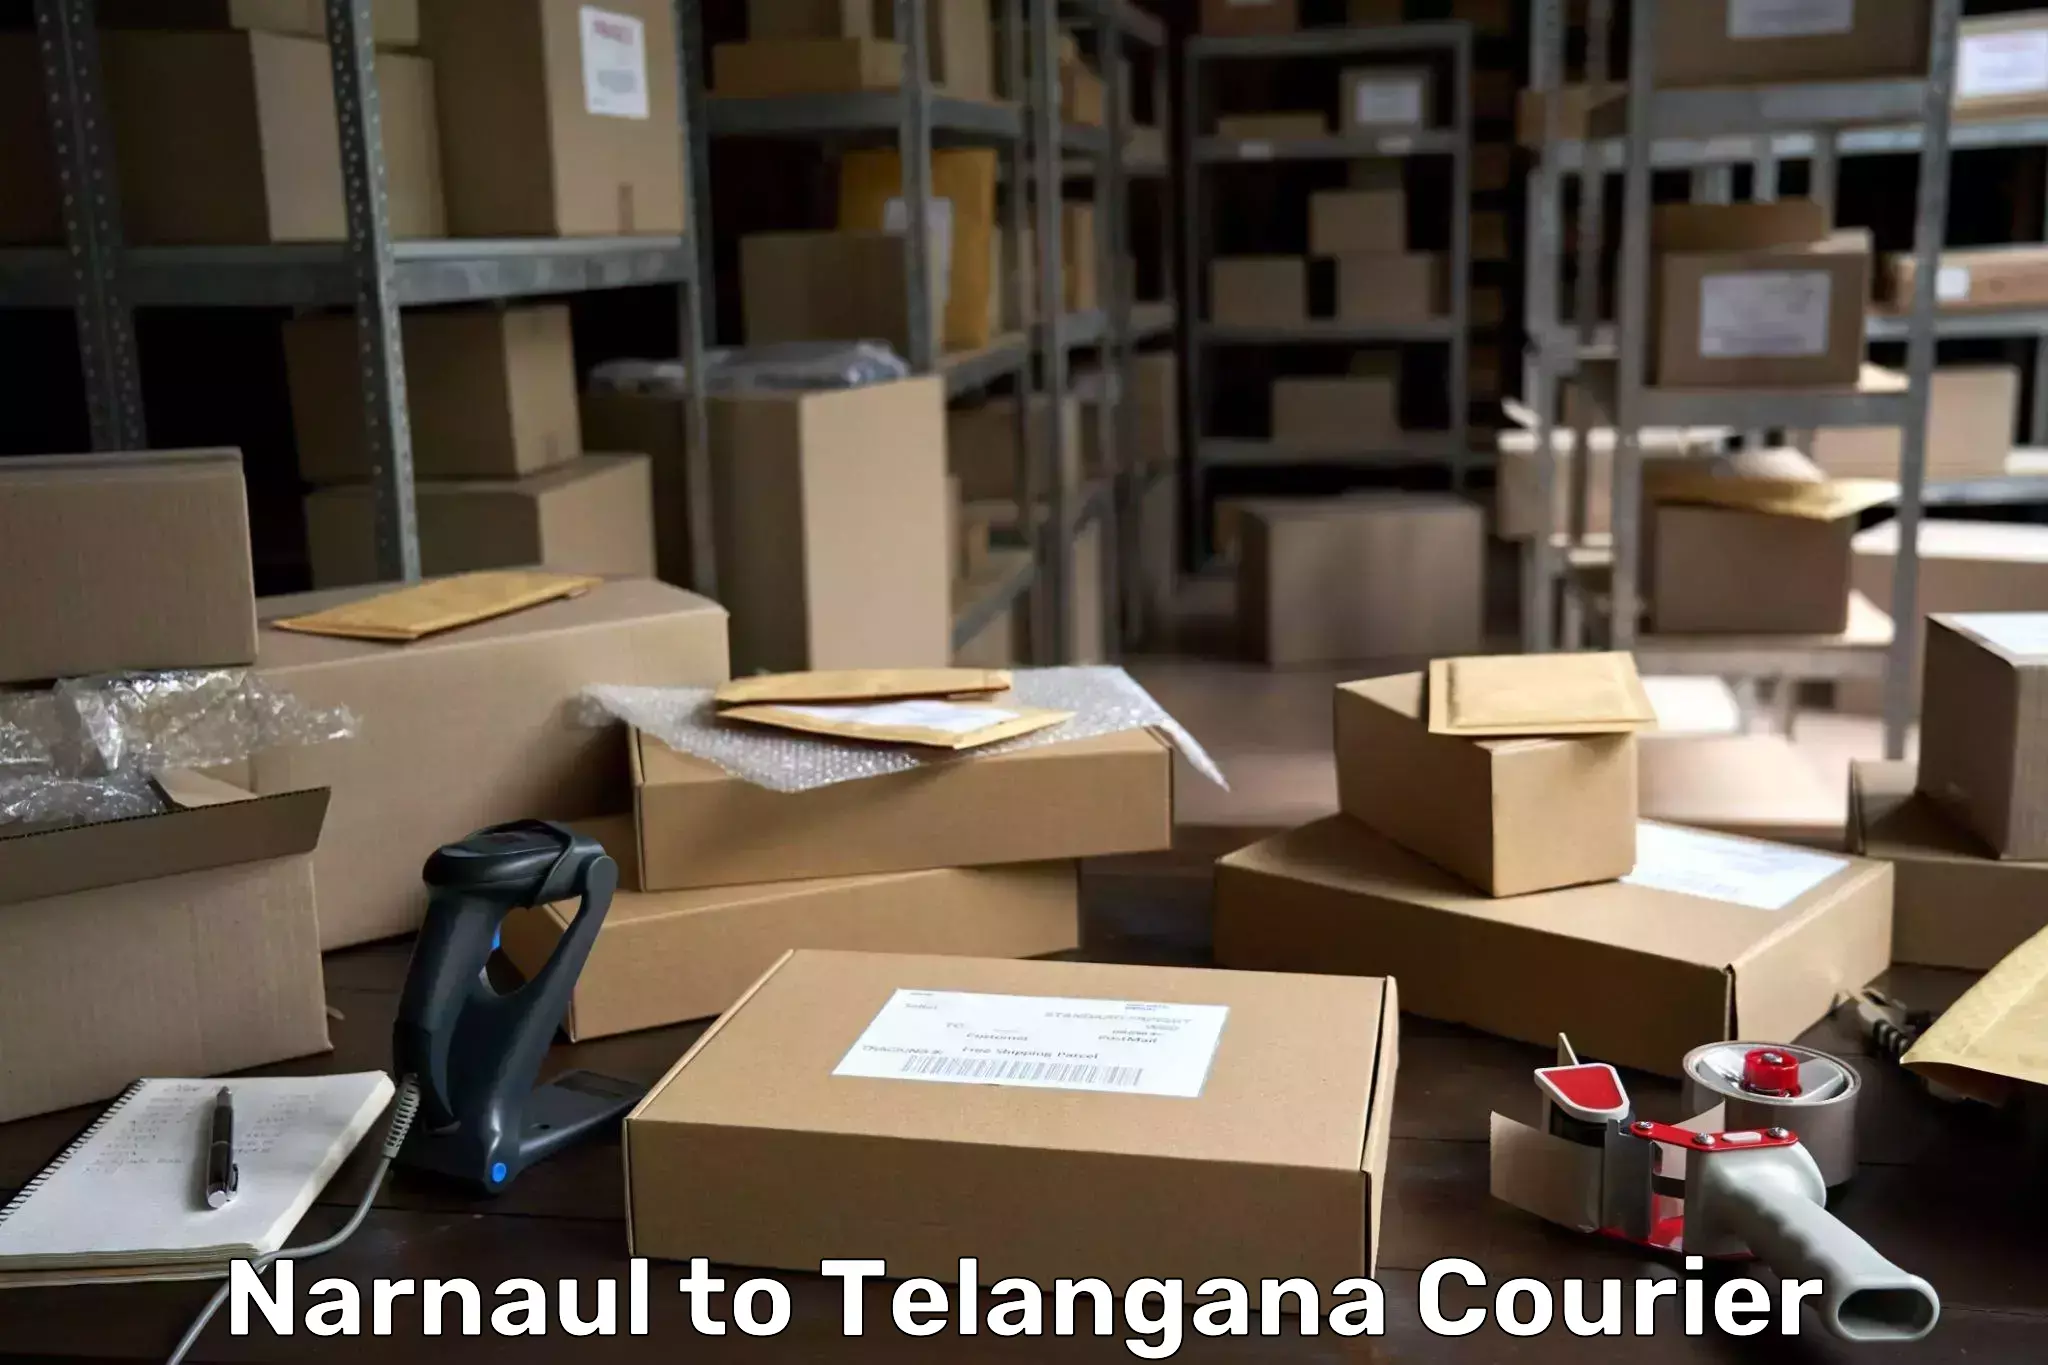 International parcel service Narnaul to Karimnagar